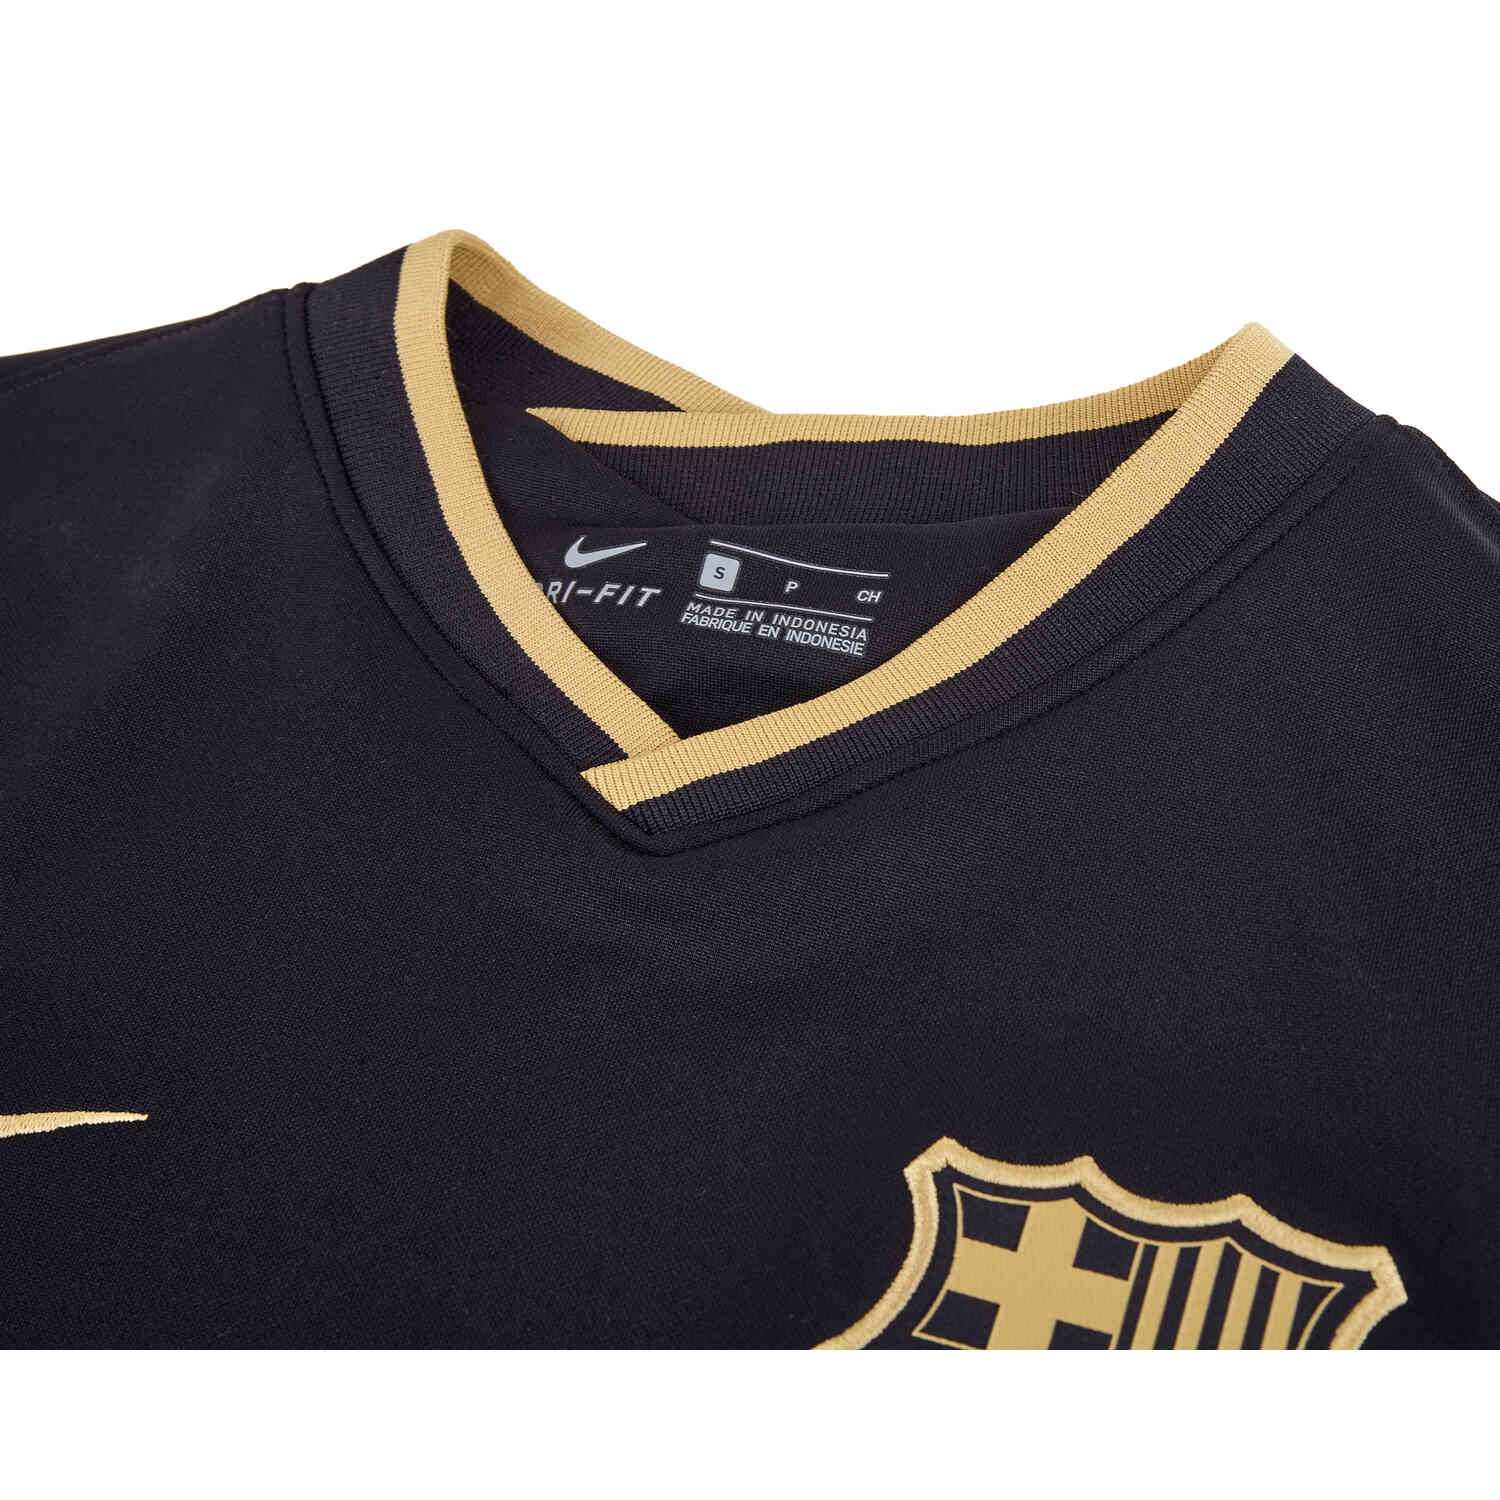 Barcelona Away Jersey Black for sale